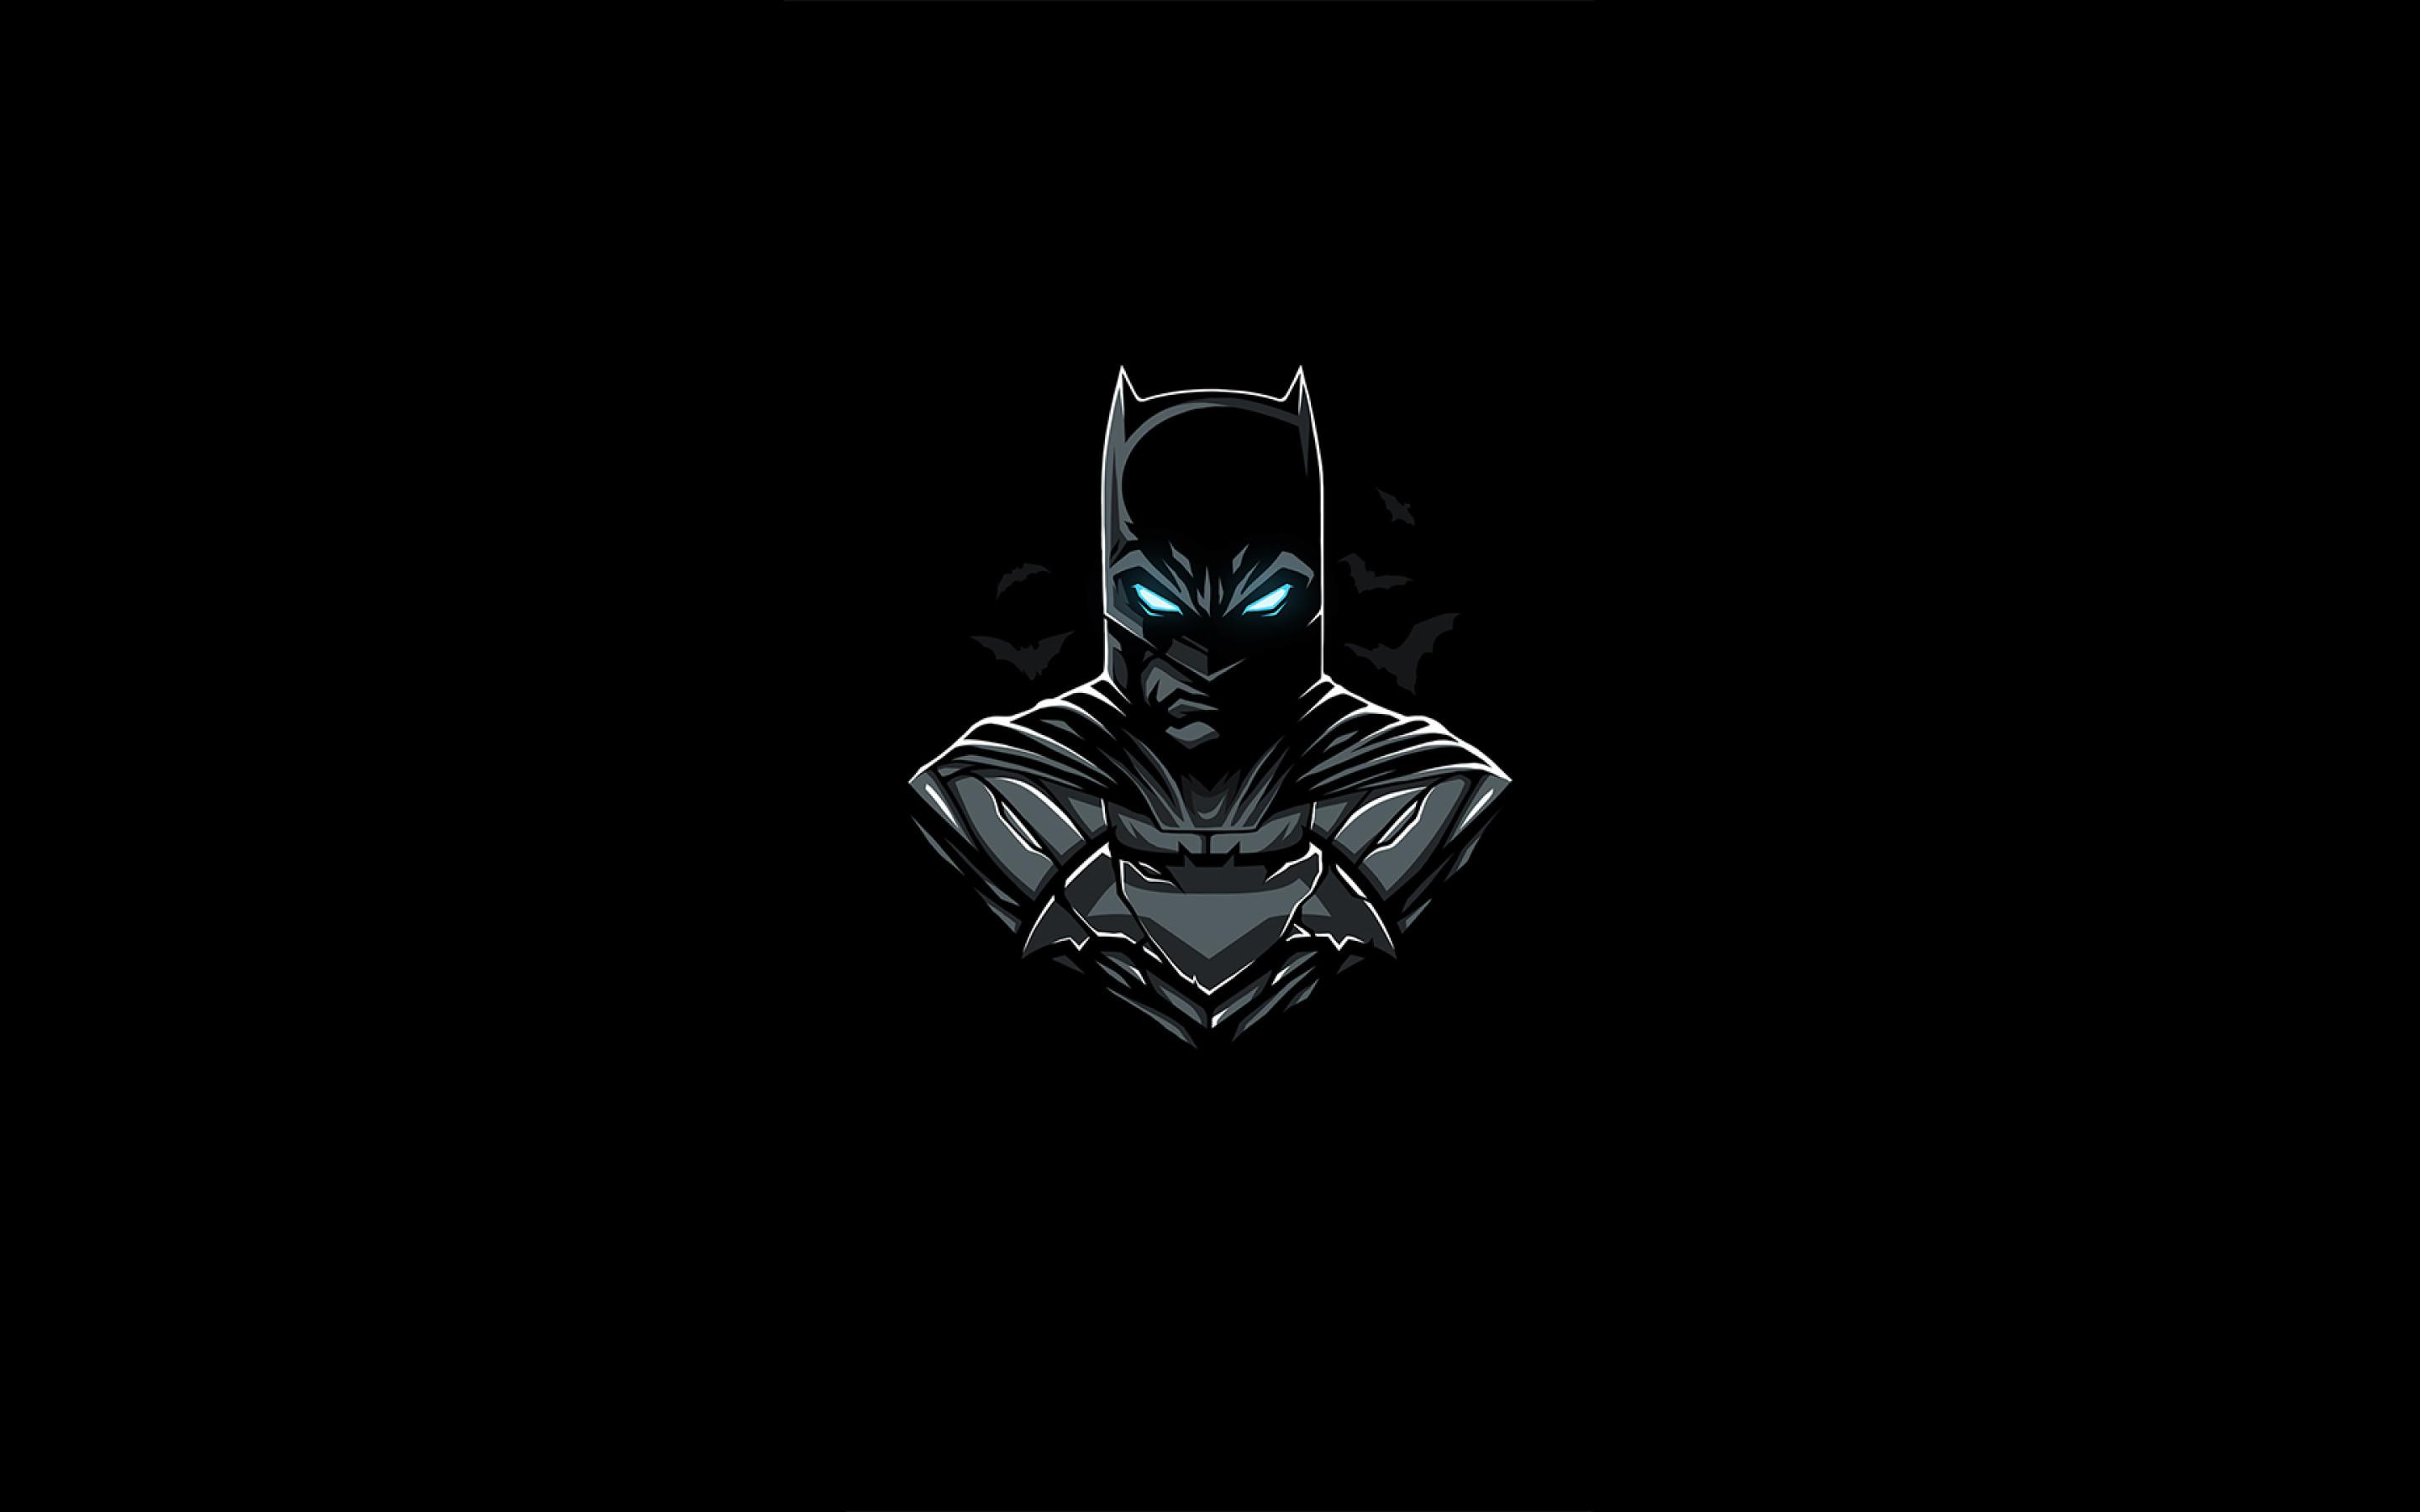 Batman Amoled Macbook Pro Retina HD 4k Wallpaper, Image, Background, Photo and Picture